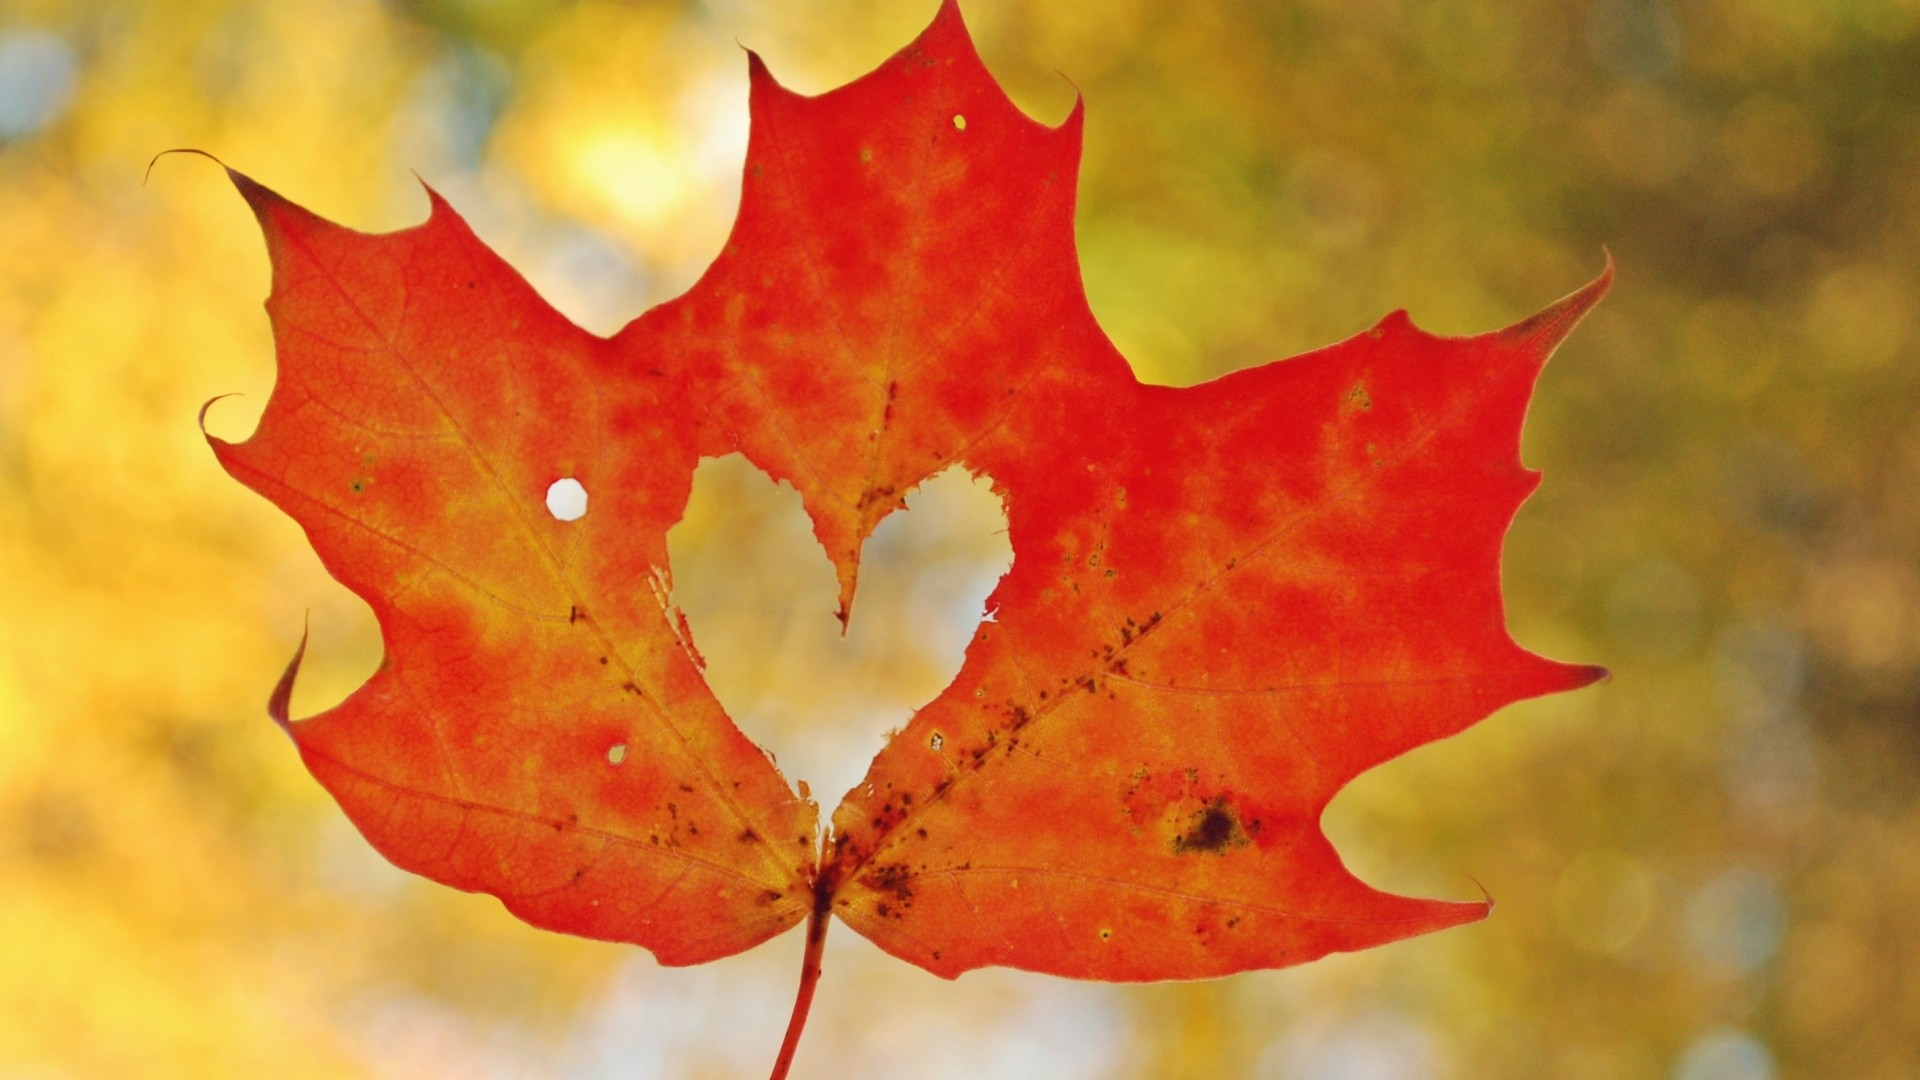 fall maple leafs